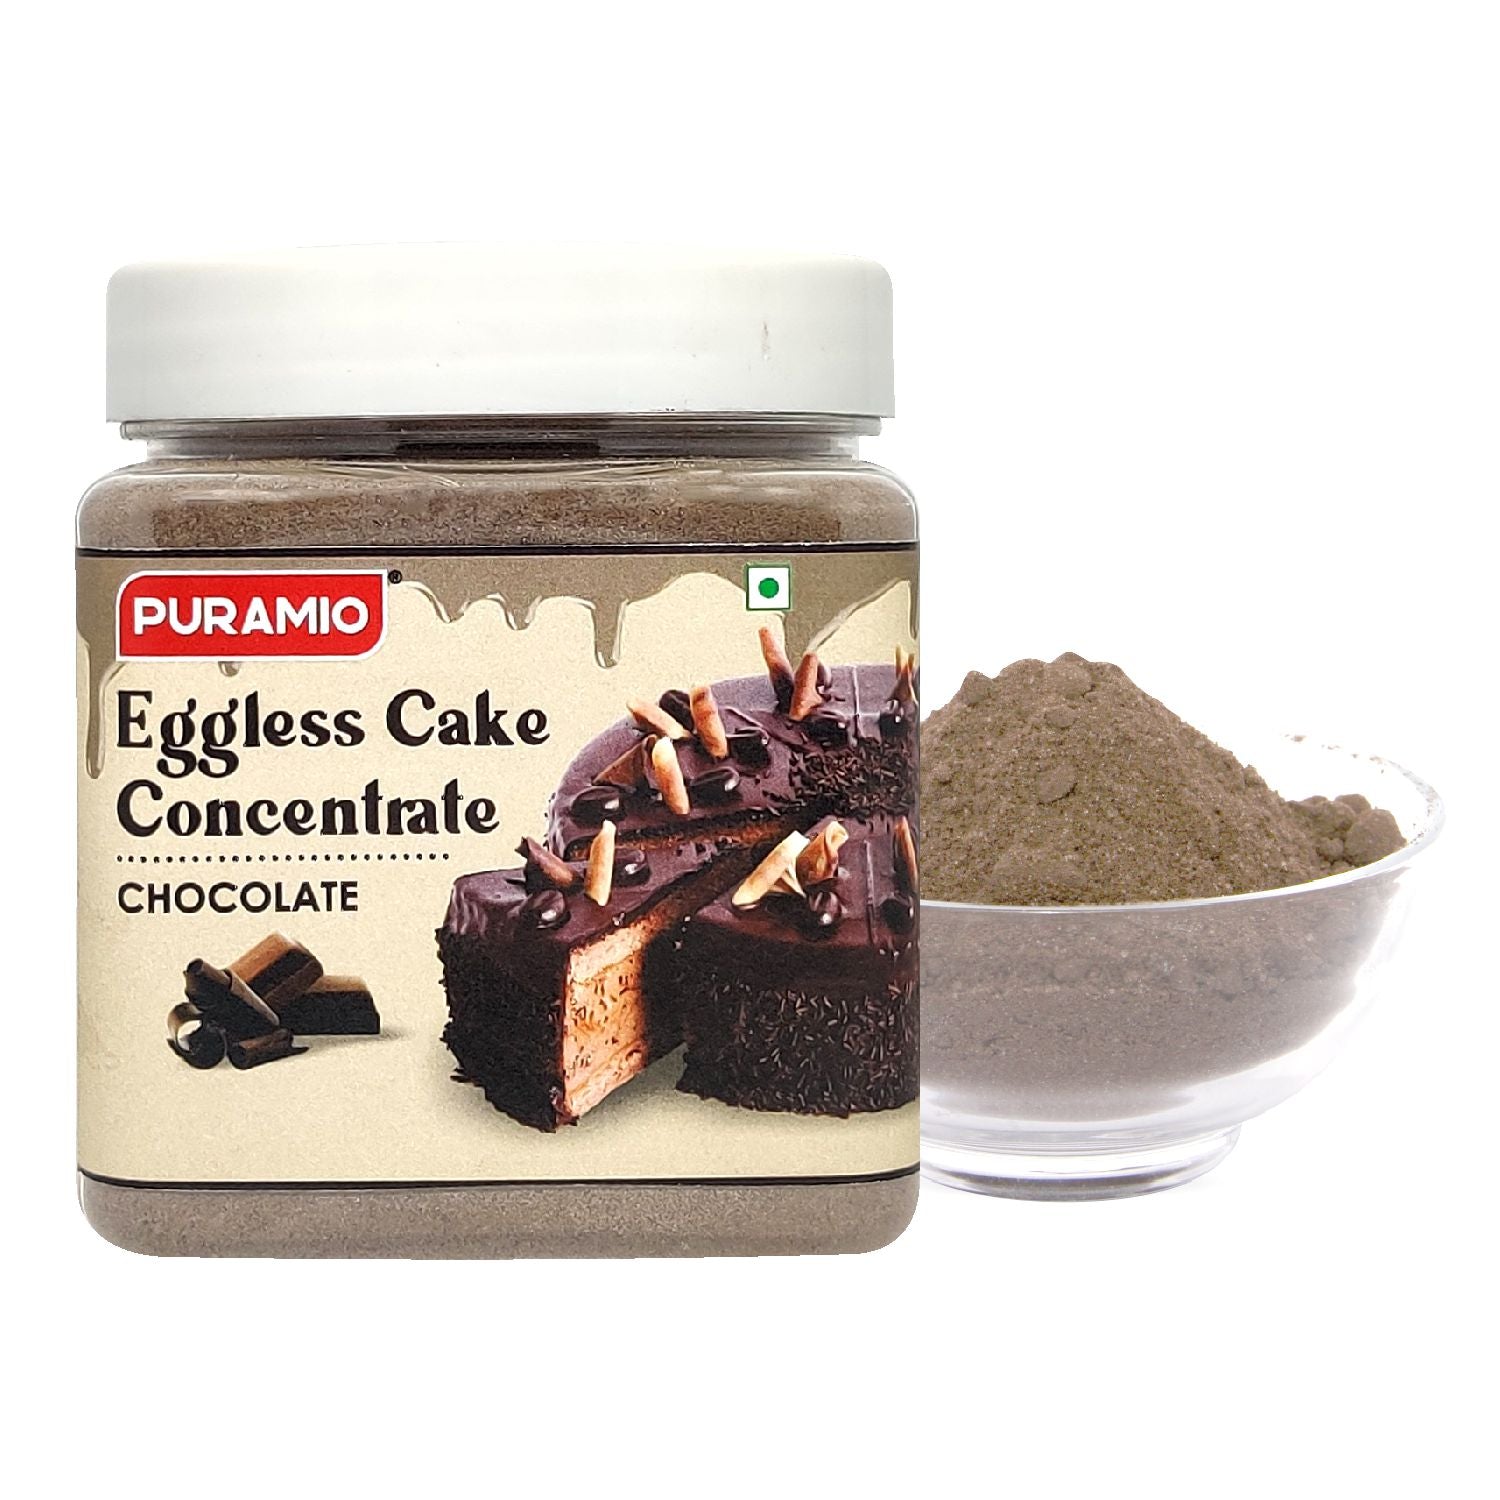 Eggless Rasmalai Cake: Rich, Creamy, and Decadent | Indian Ambrosia